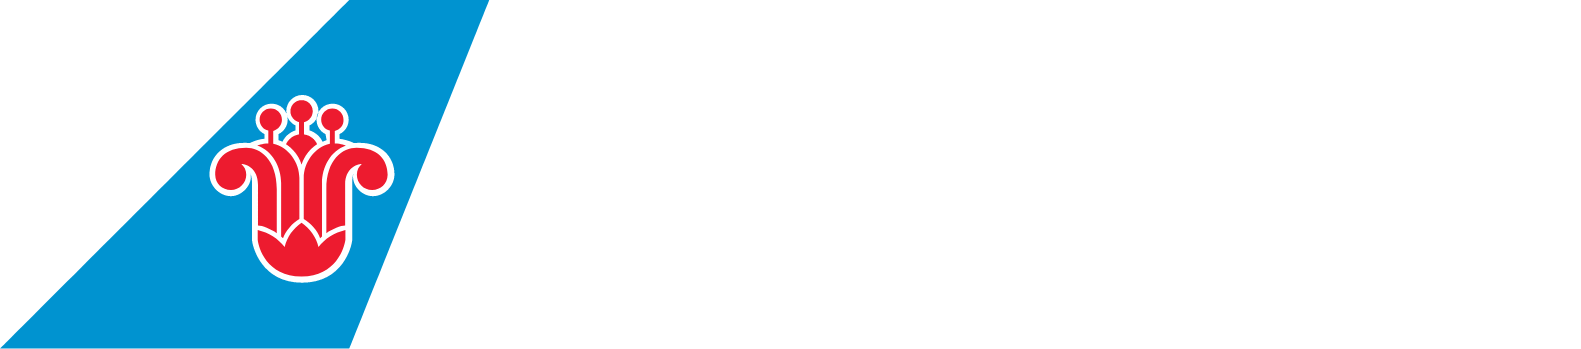 China Southern Airlines
 Logo groß für dunkle Hintergründe (transparentes PNG)